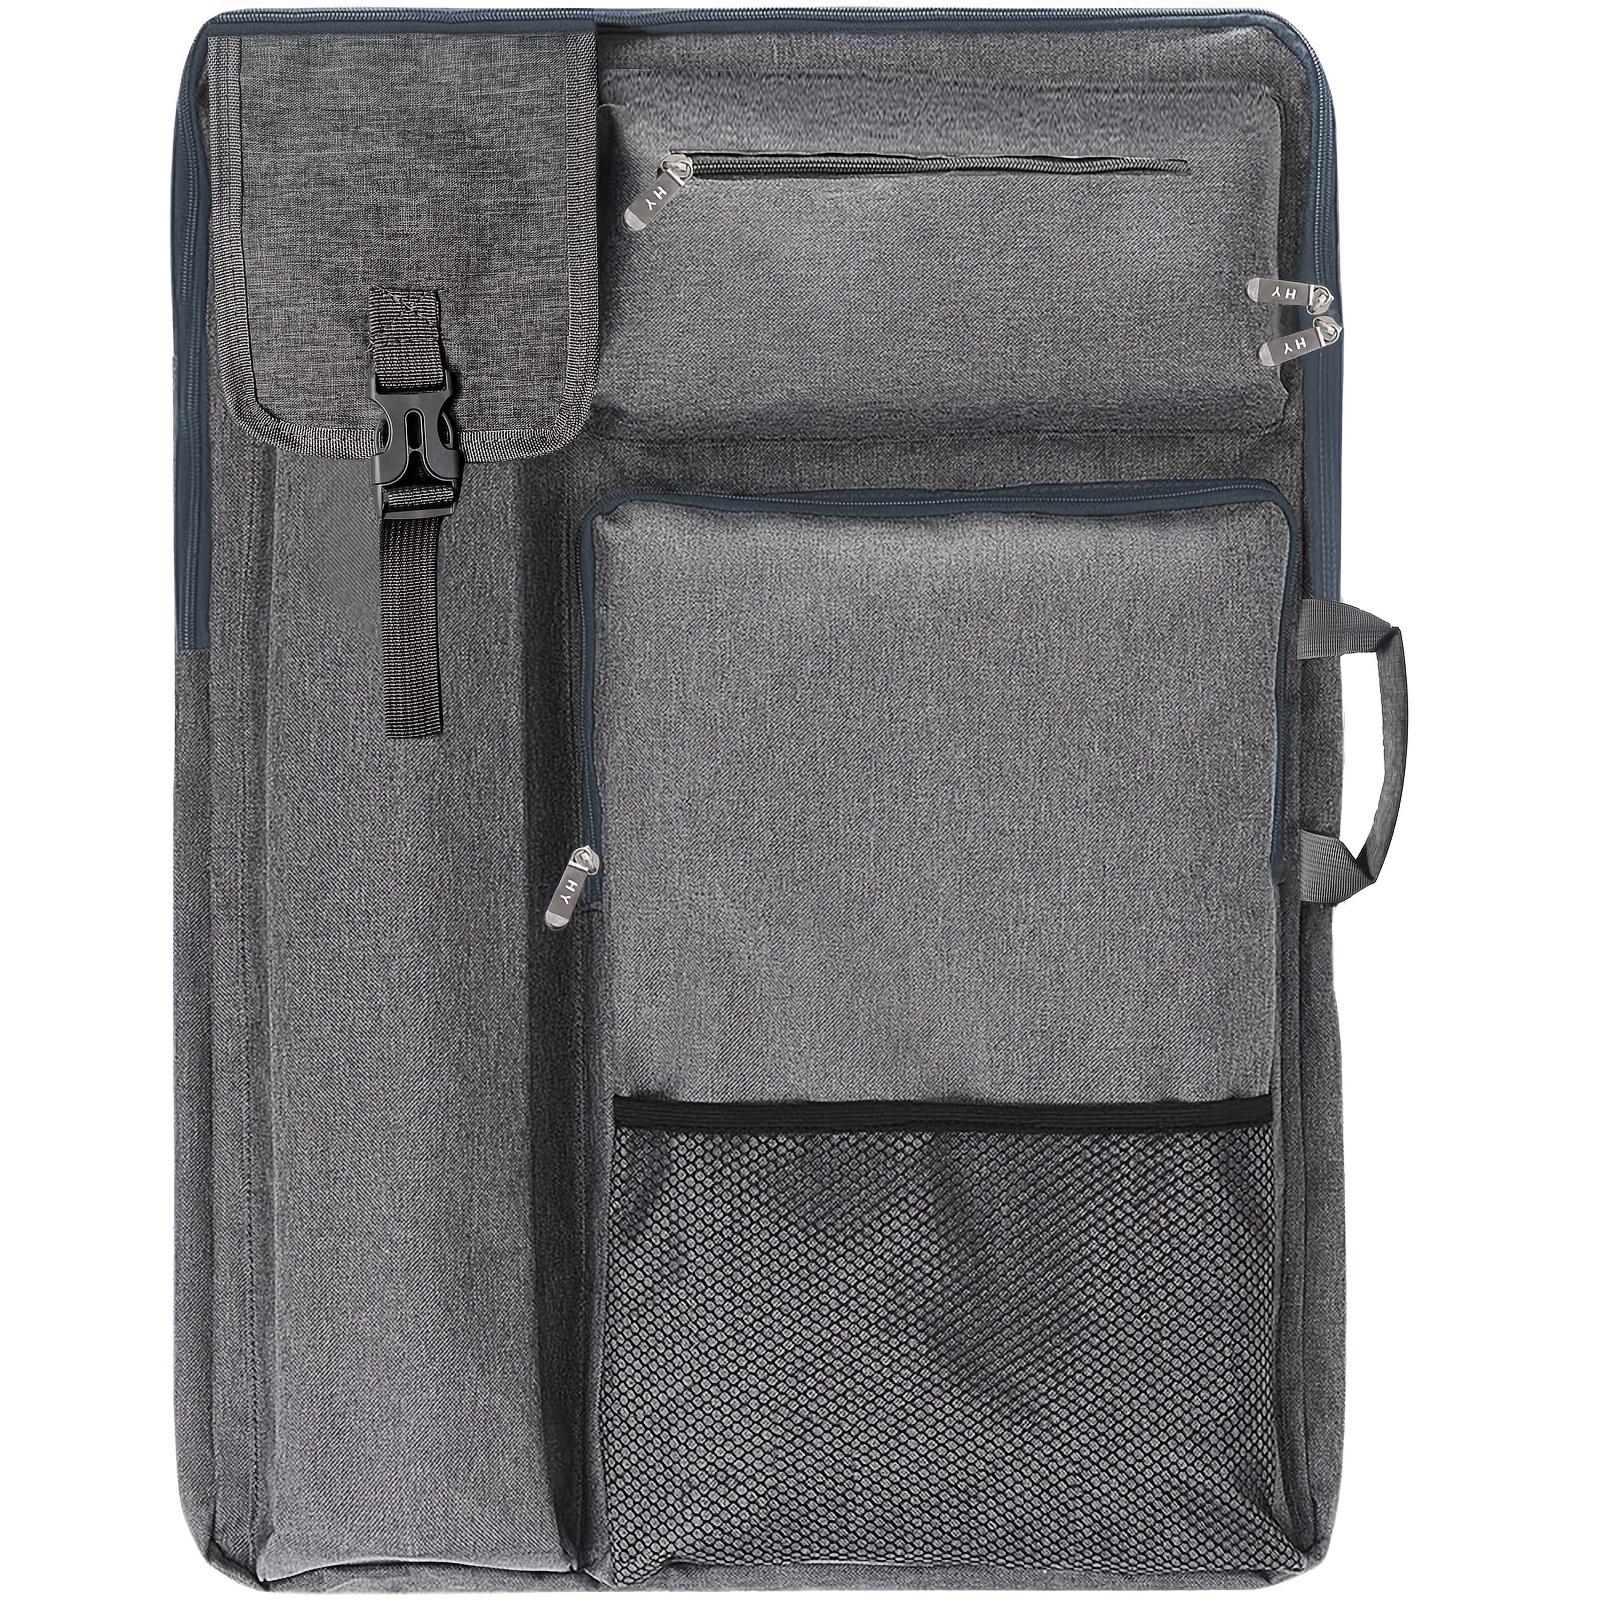 Art Supplies Organizer Bag Art Craft Tool Storage Tote Bag Art Supplies Carrying Bag Case Artist Travel Carrier Bag Waterproof Paint Box Case